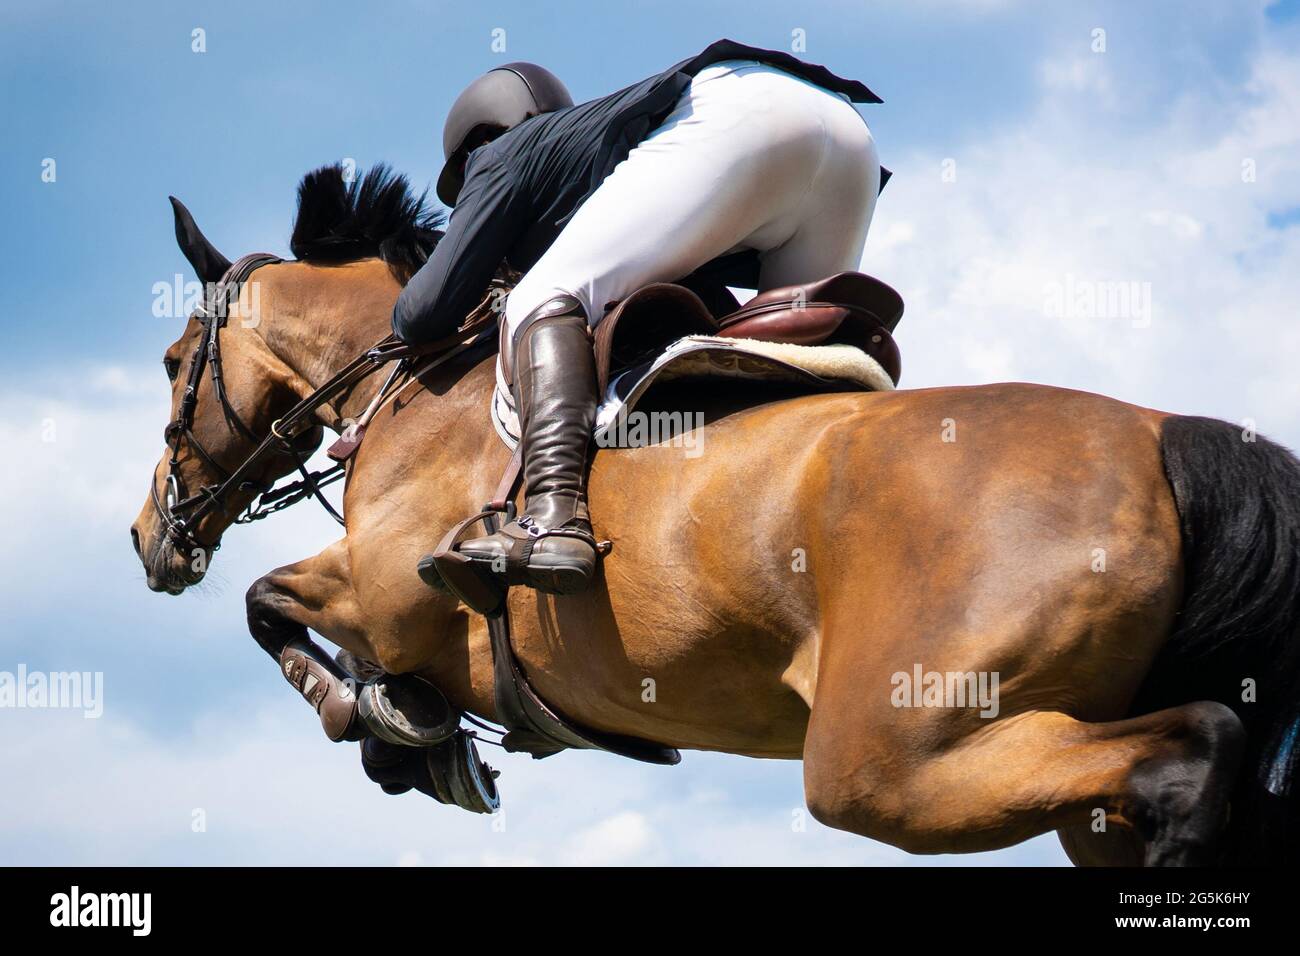 Deportes ecuestres foto-tema: Salto de Caballo, Salto de Espectáculo, Equitación. Foto de stock